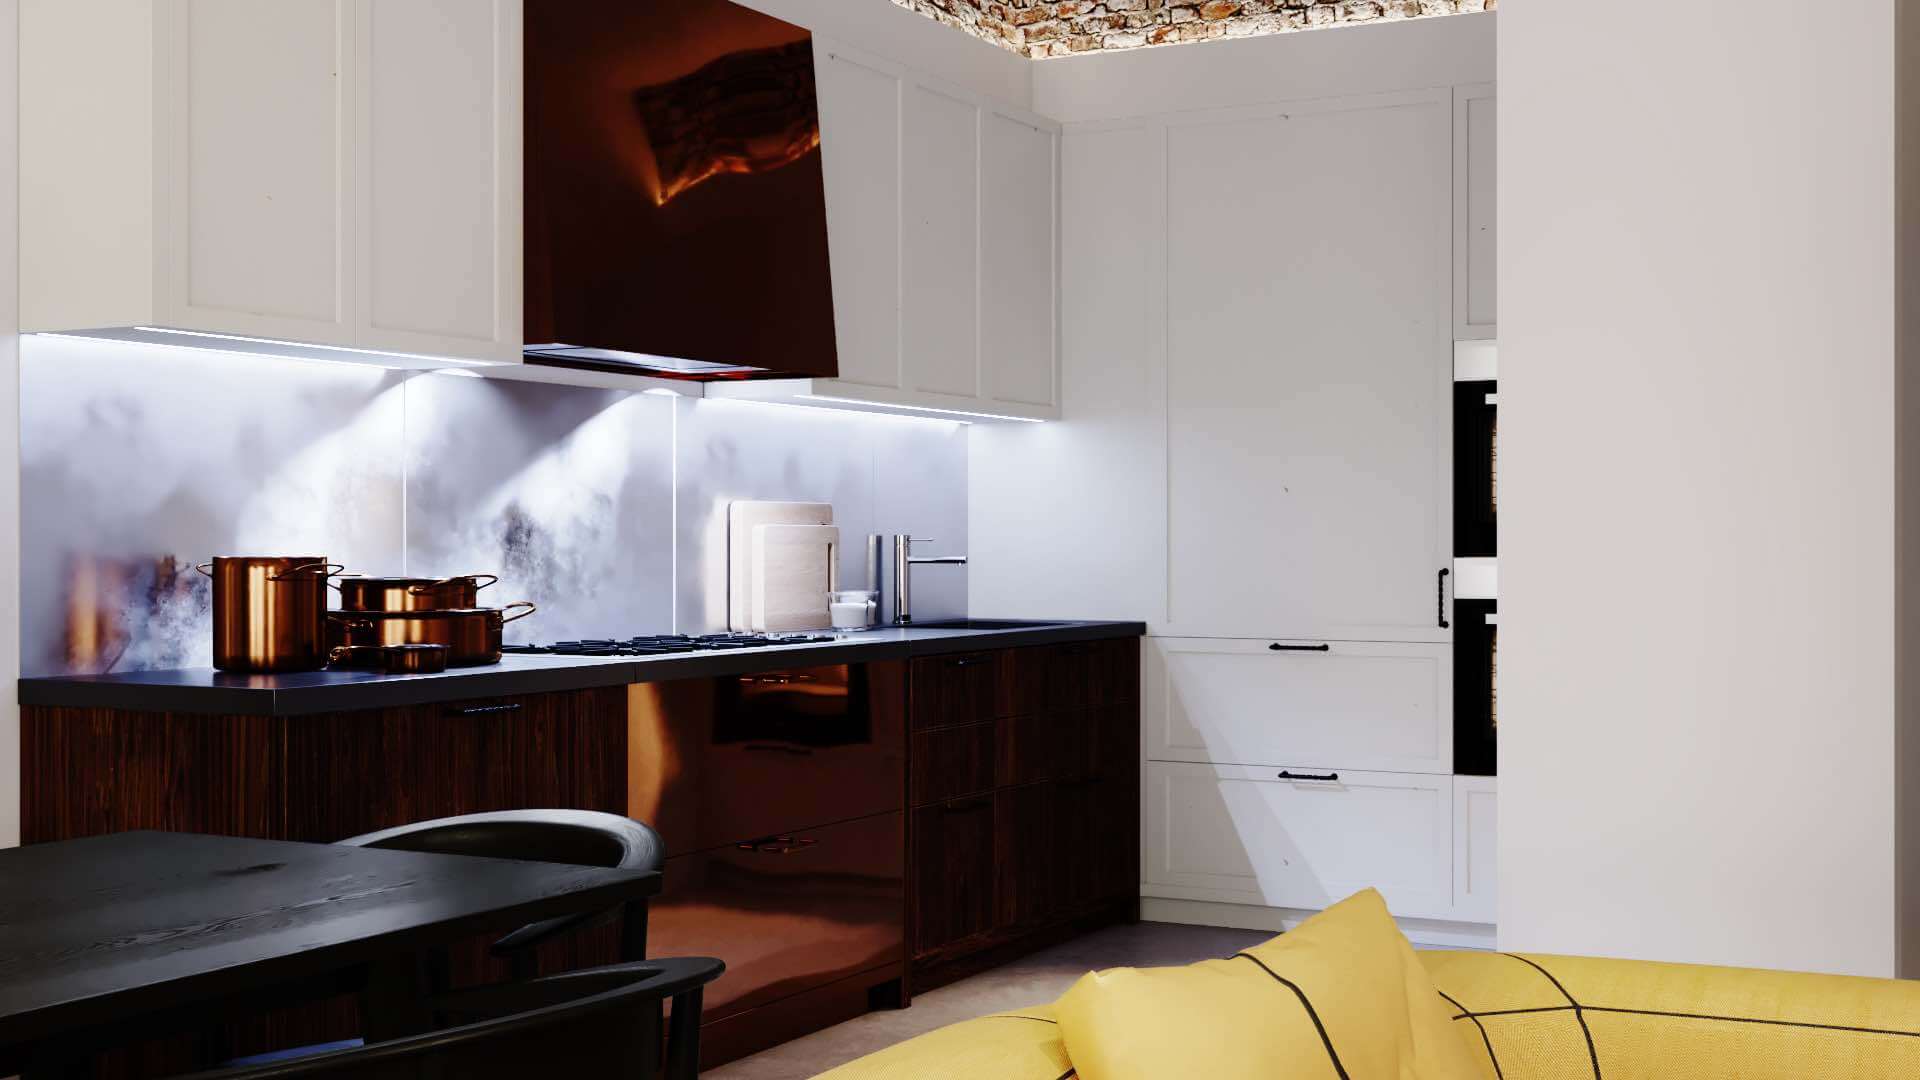 Oasis Apartment kitchen modern wood light - cgi visualization